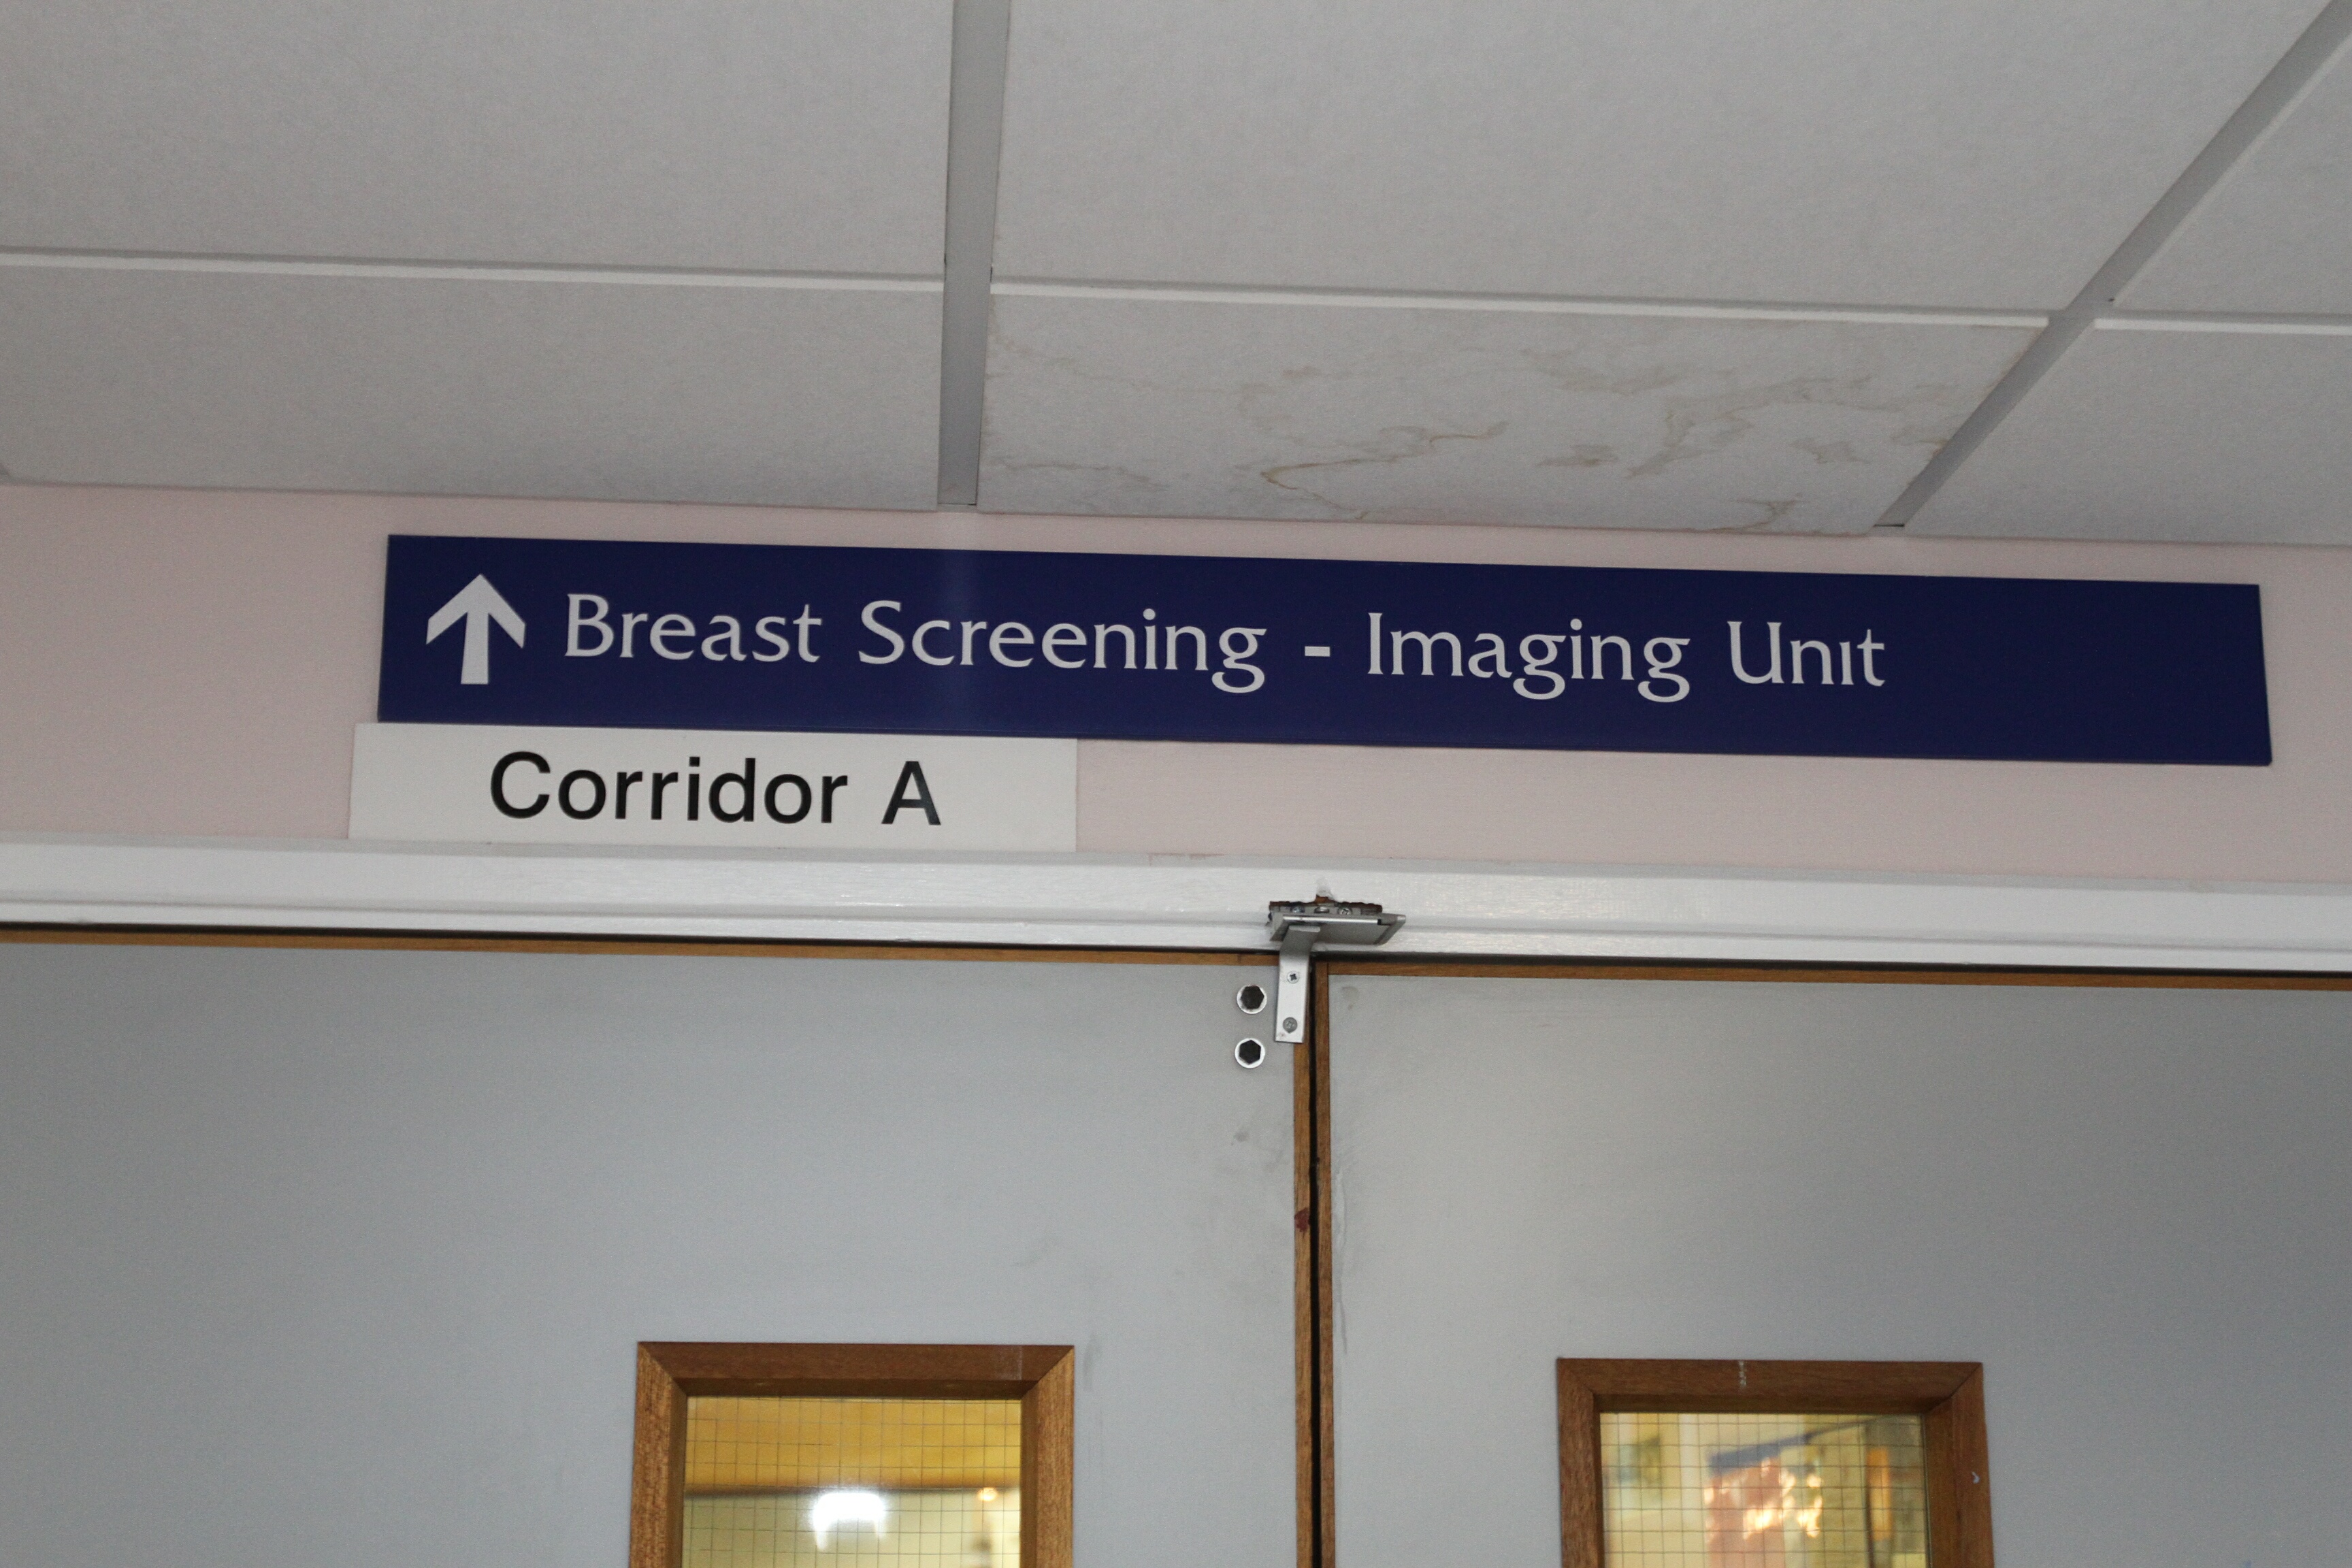 The breast screening unit at Ninewells hospital, Dundee